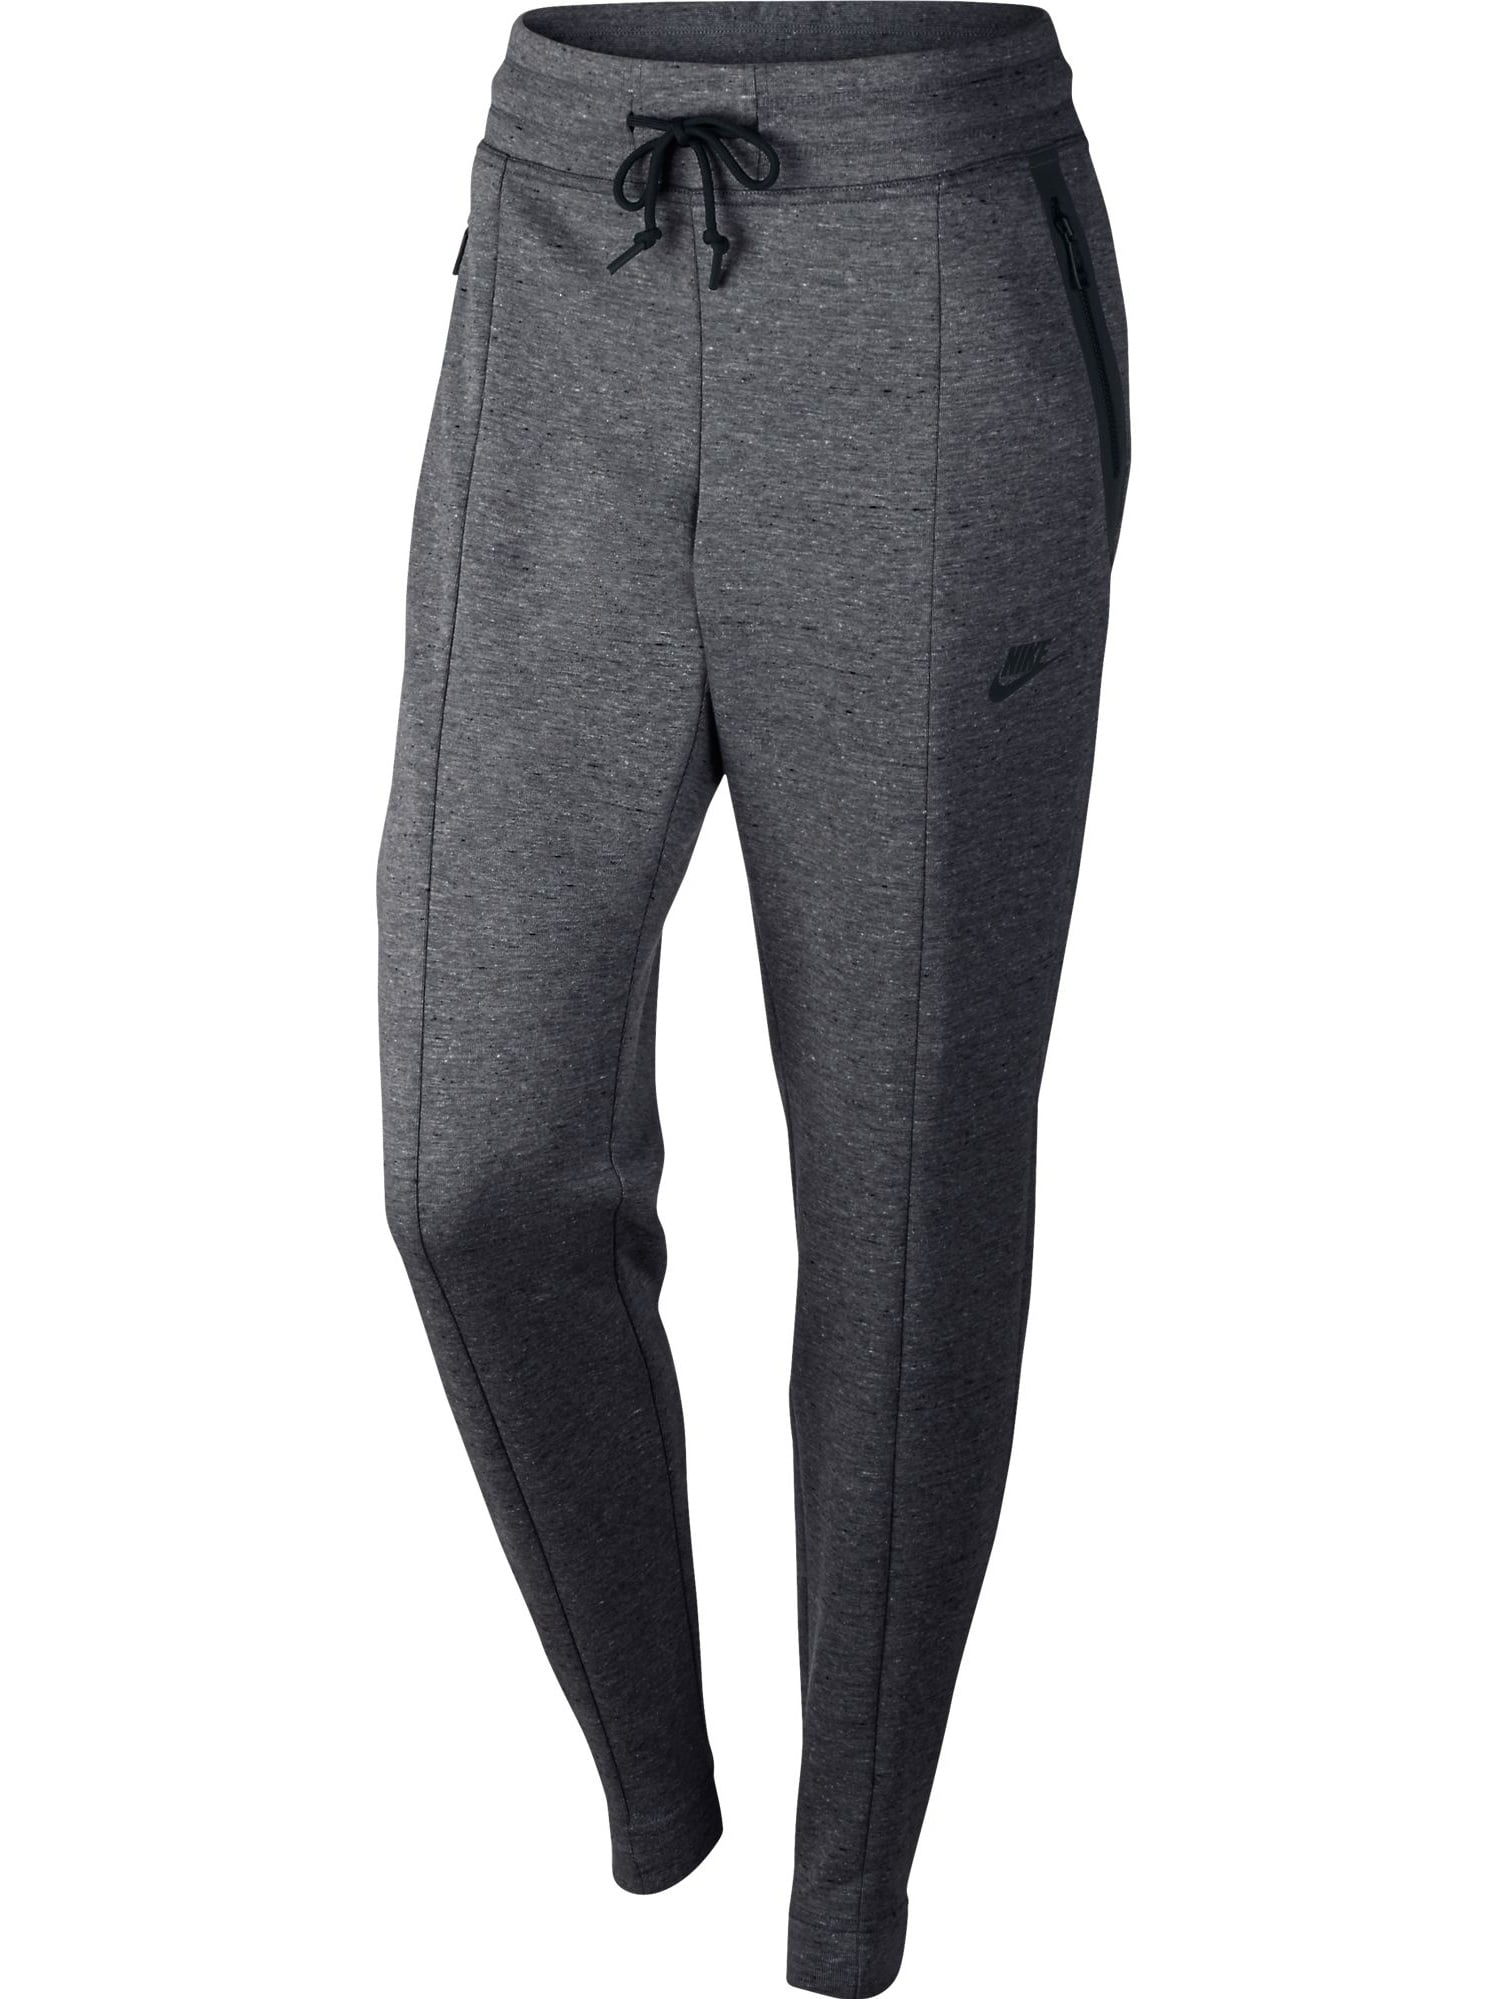 Nike Sportswear Tech Fleece Women Pants Joggers Black CW4292 010 Size XL 